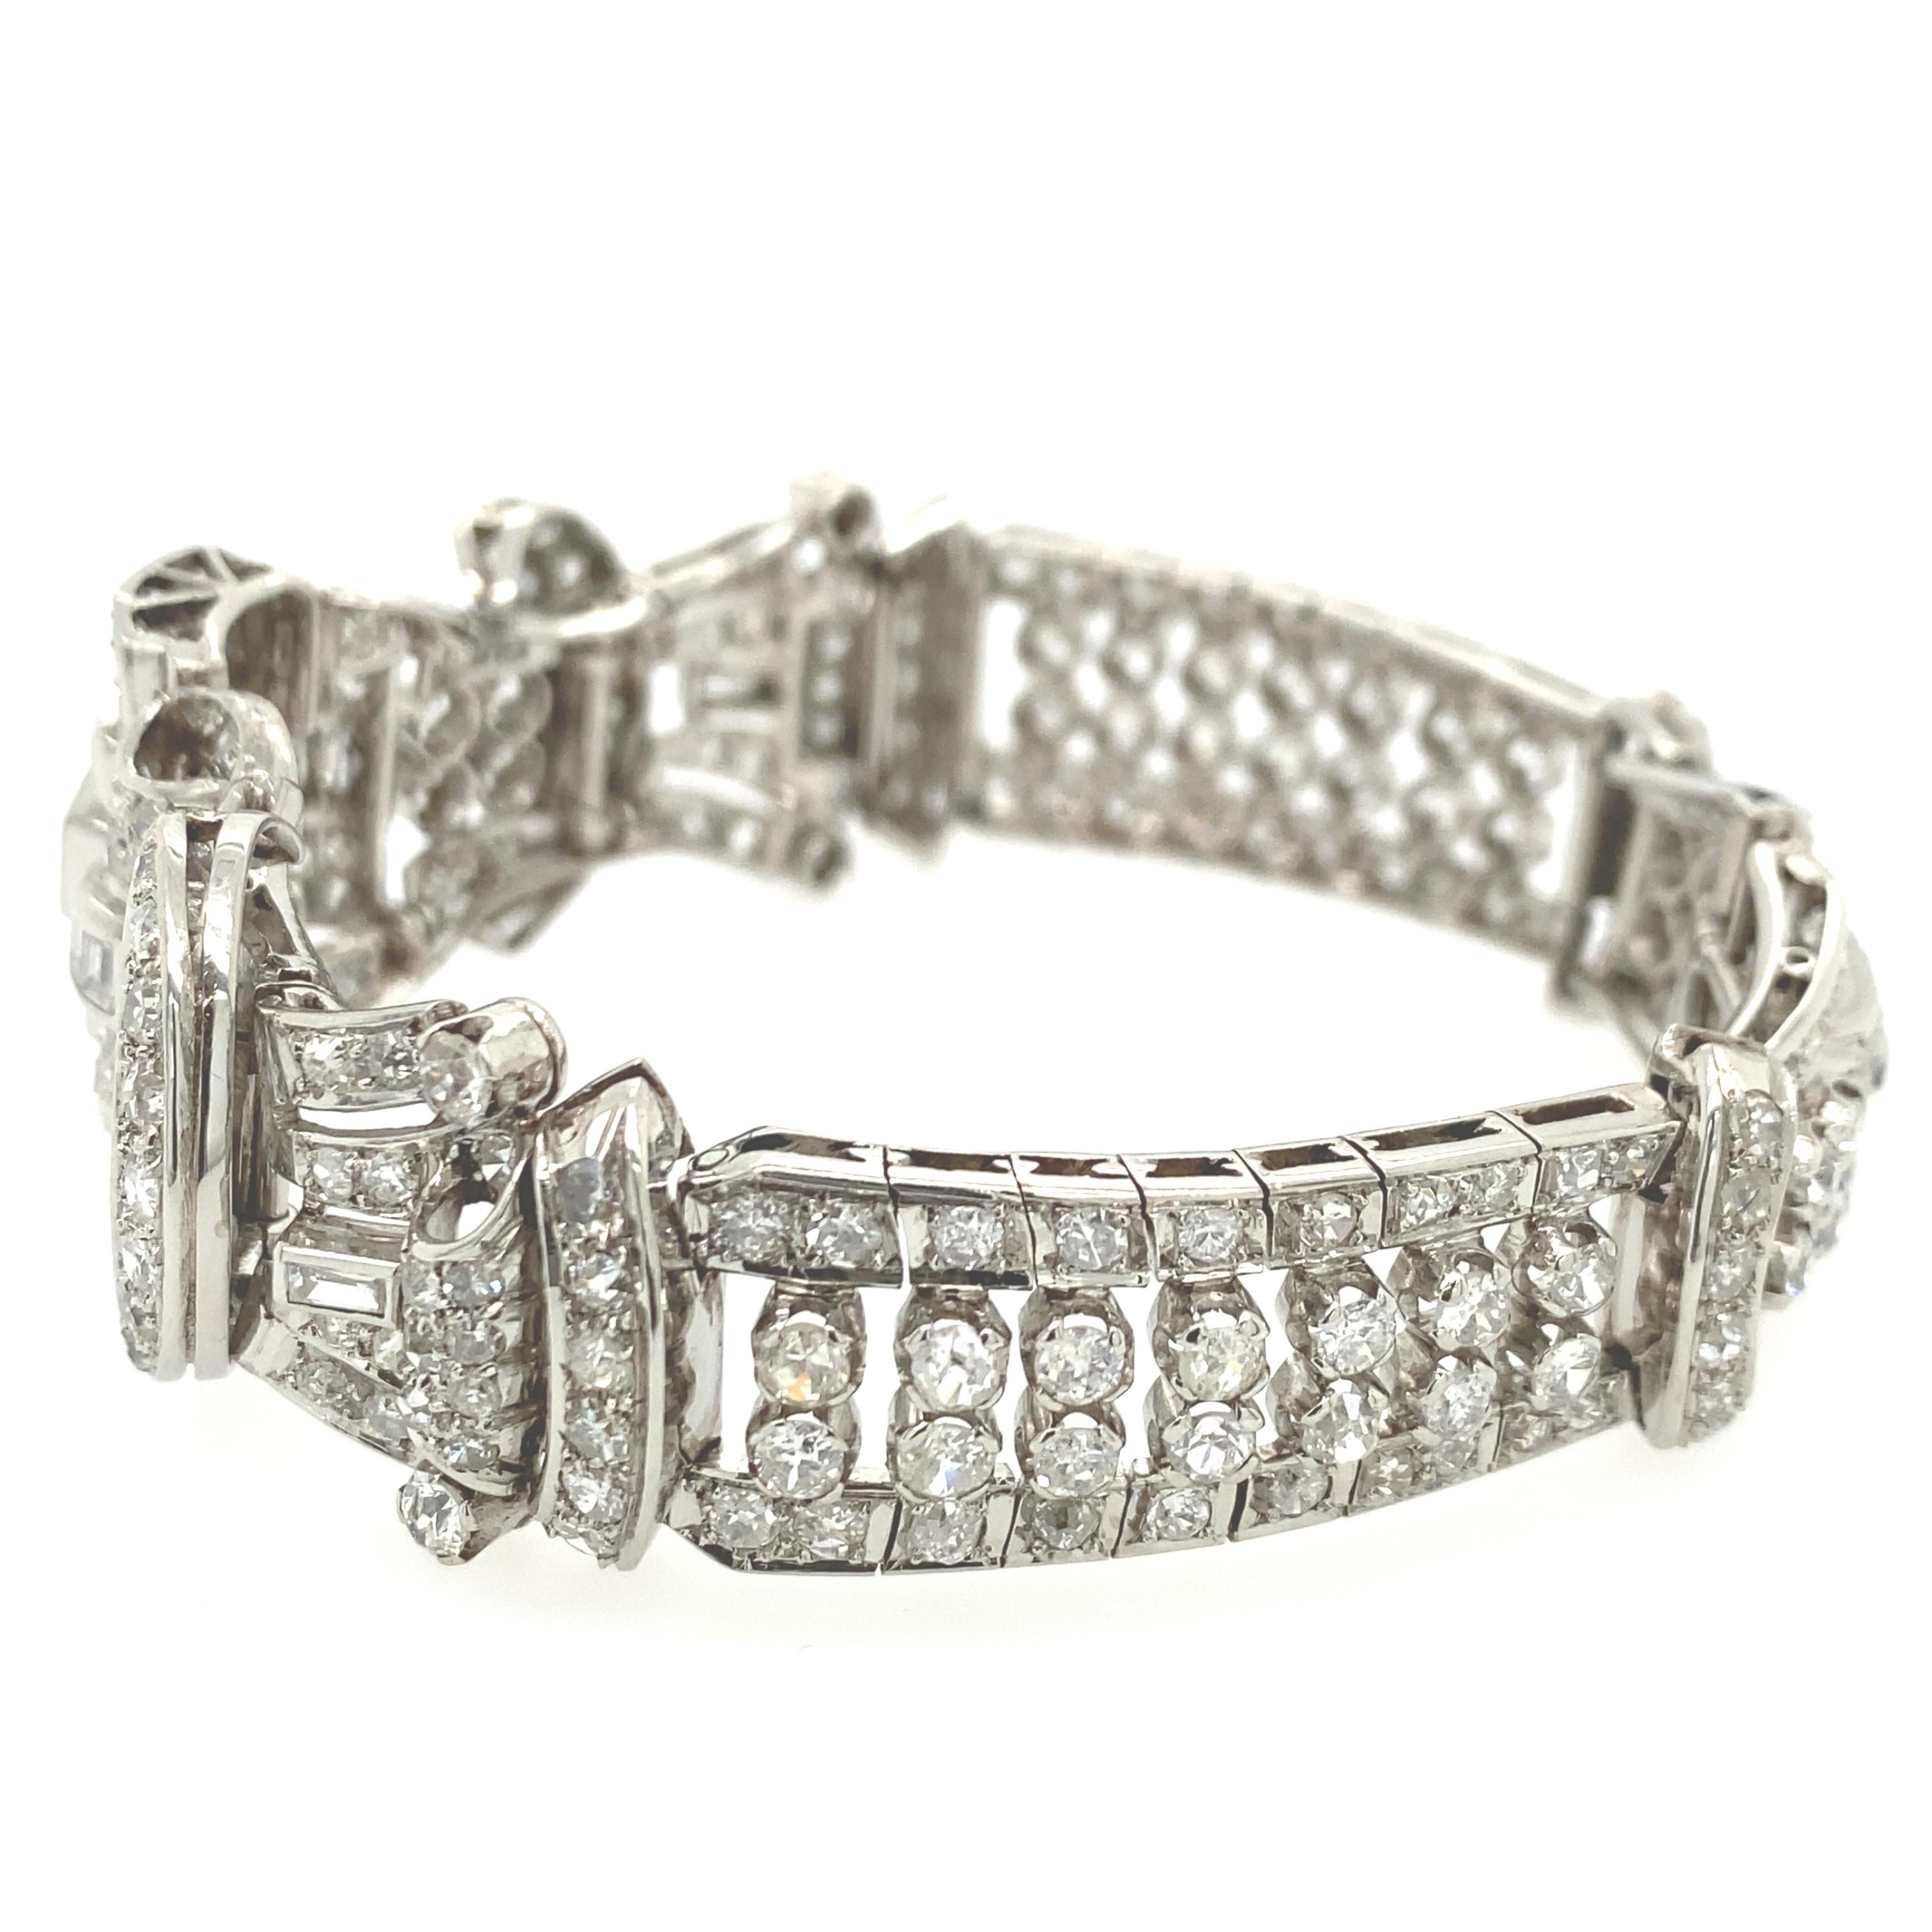 Women's or Men's Art Deco Diamond Bracelet with 12.50 Carats of Diamonds